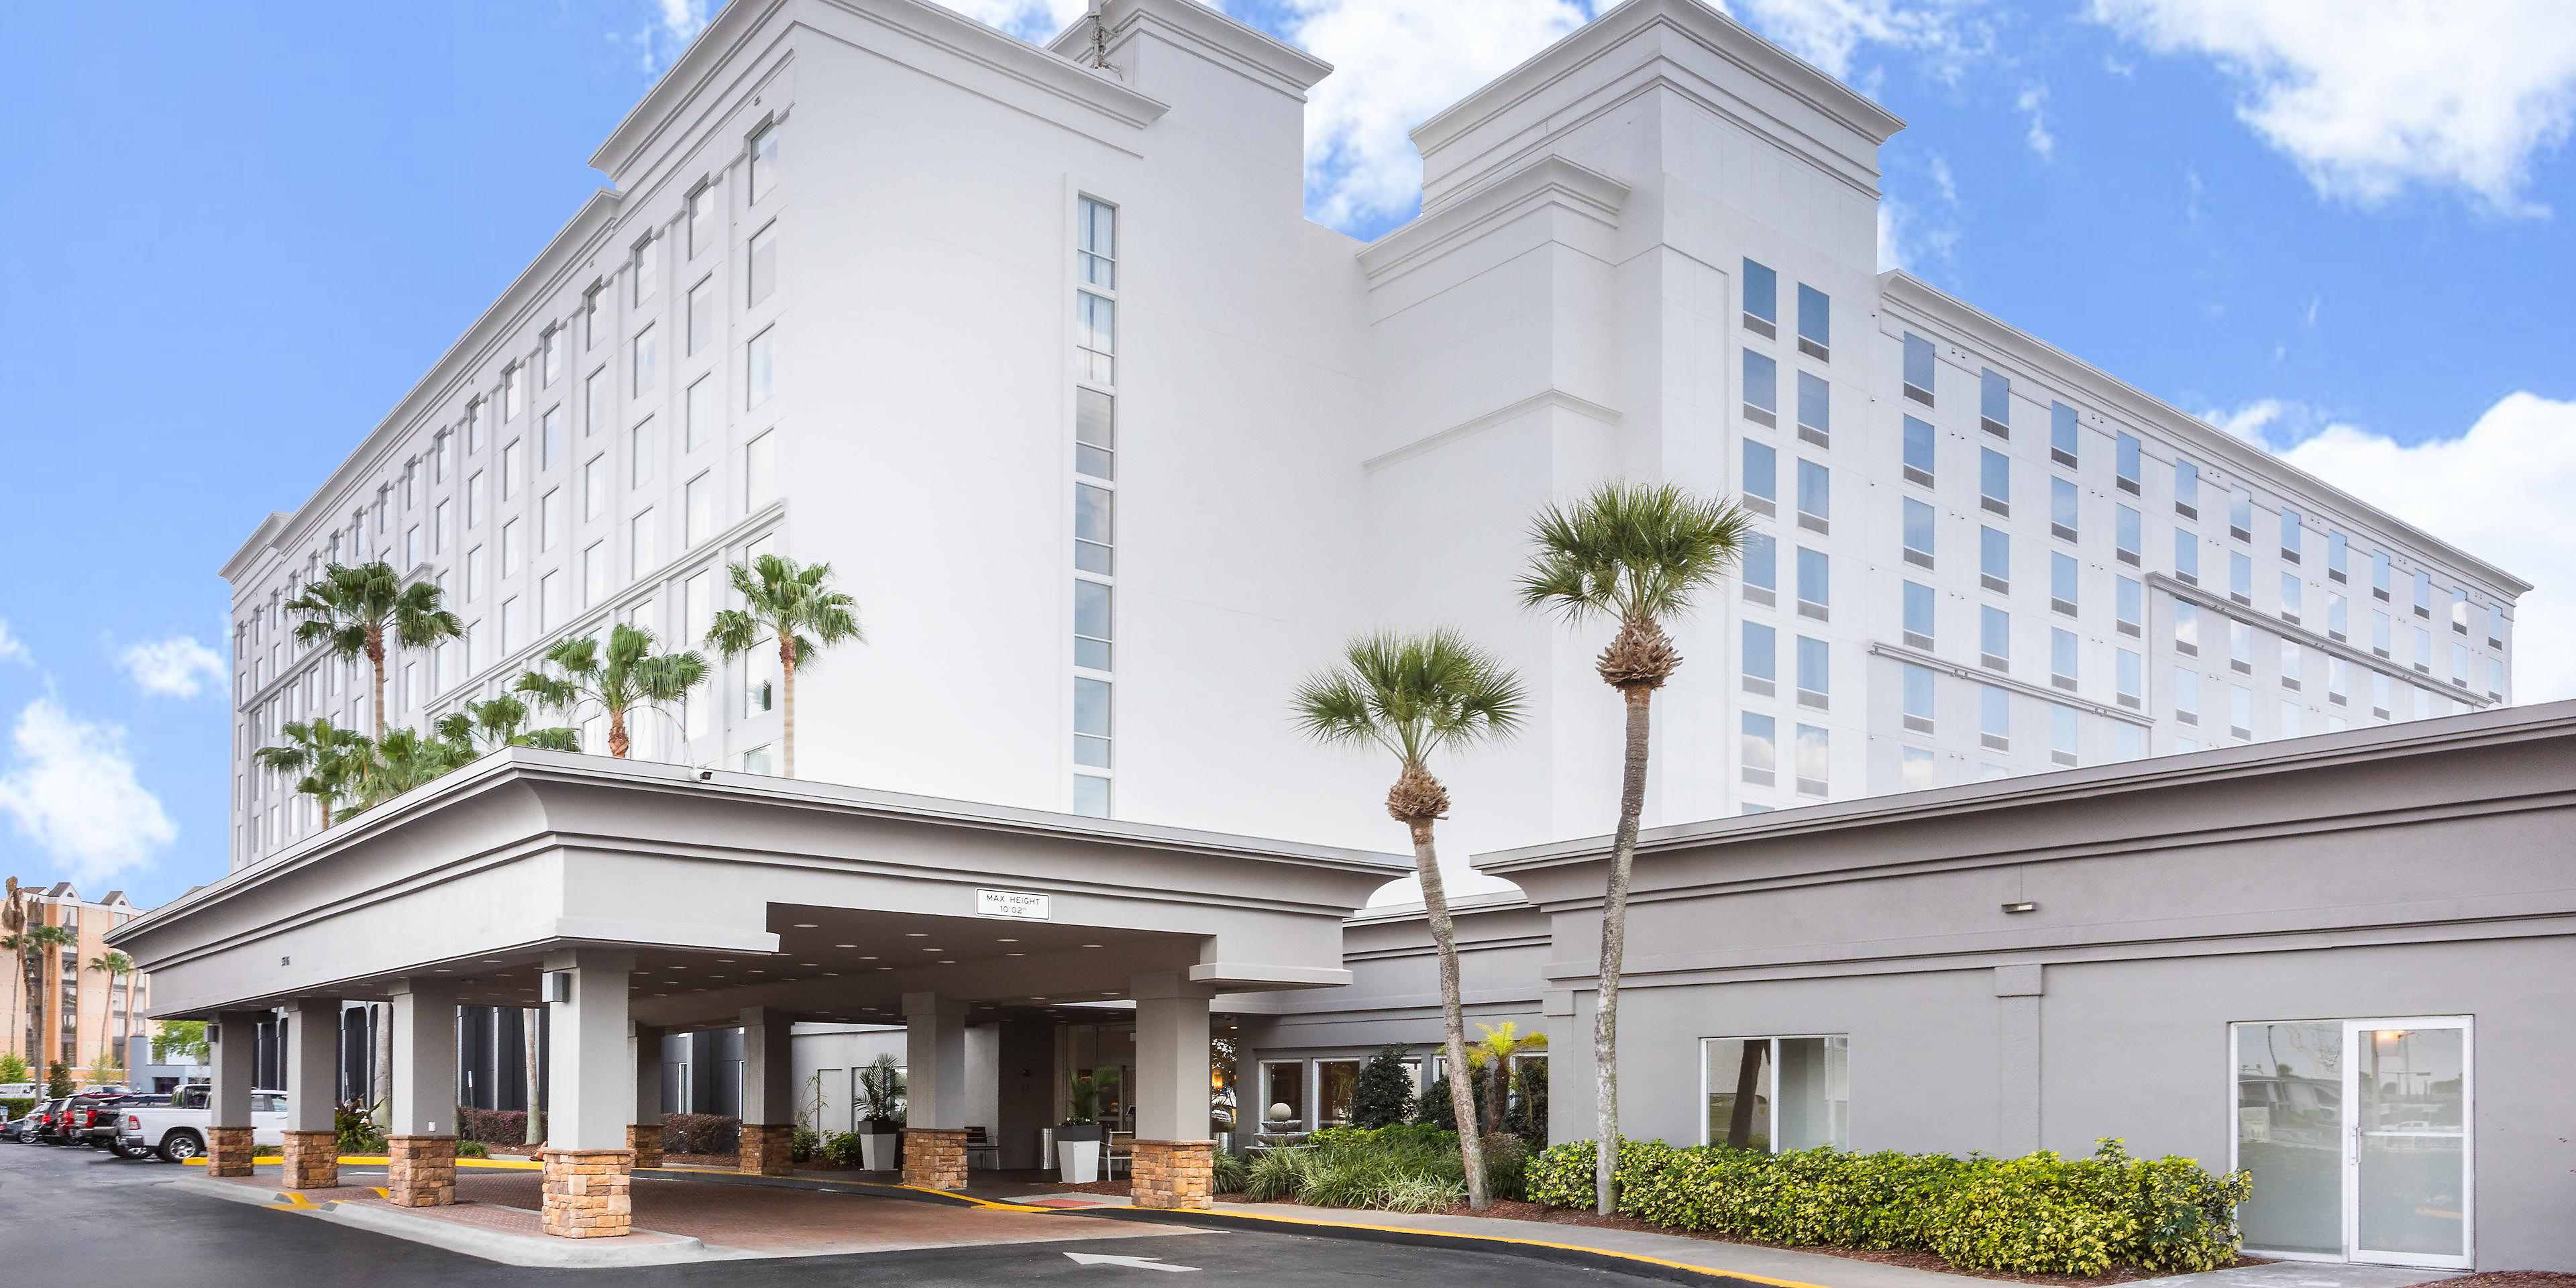 Pet-Friendly Hotels in Orlando